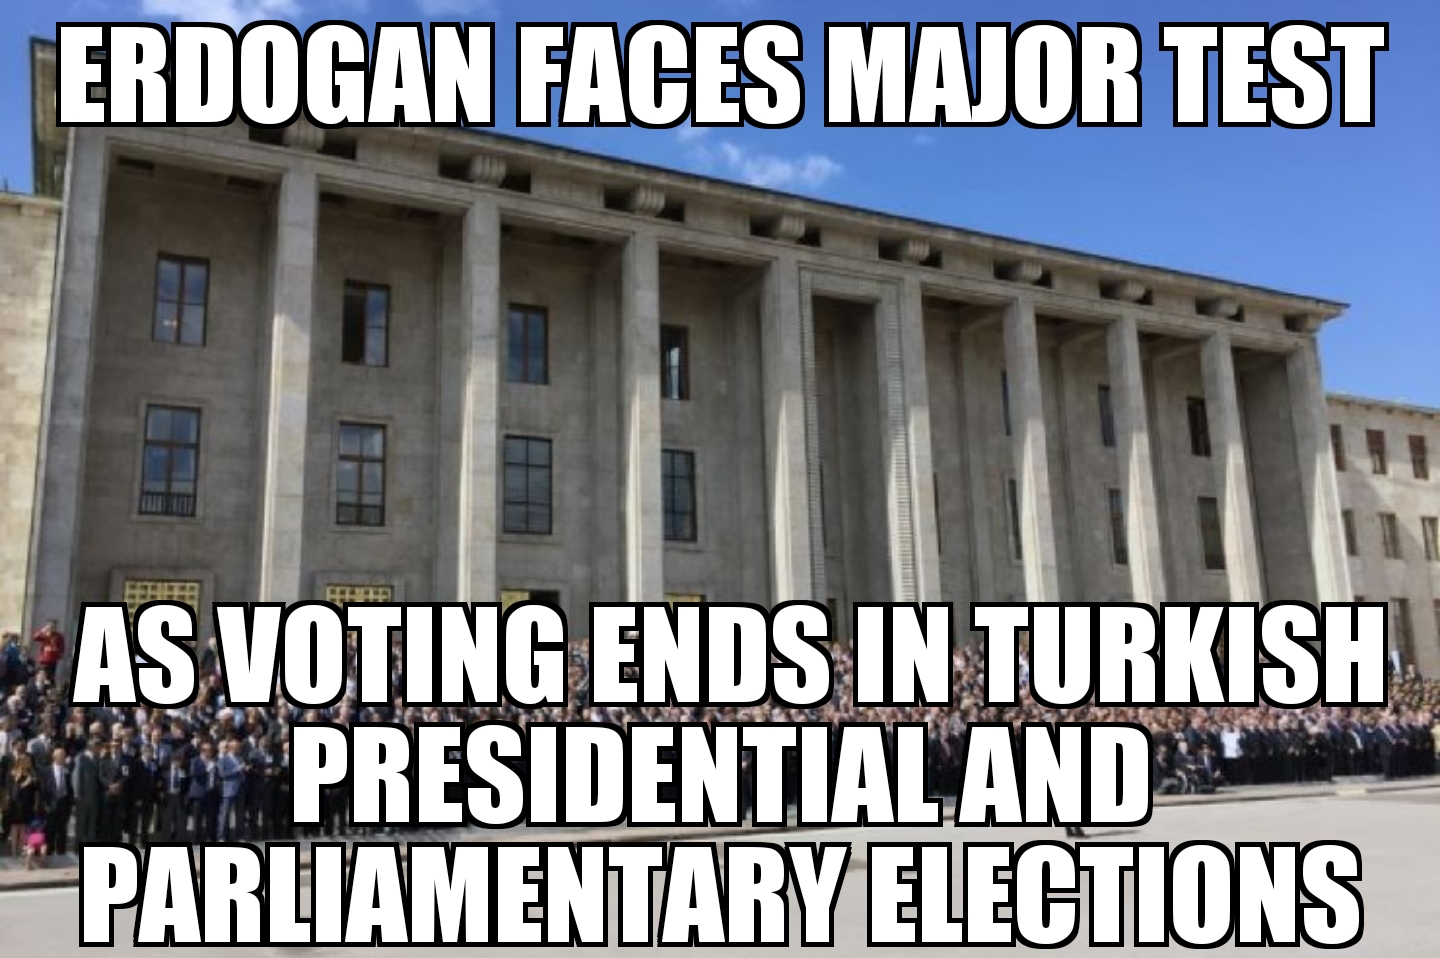 Erdogan faces test in Turkey elections